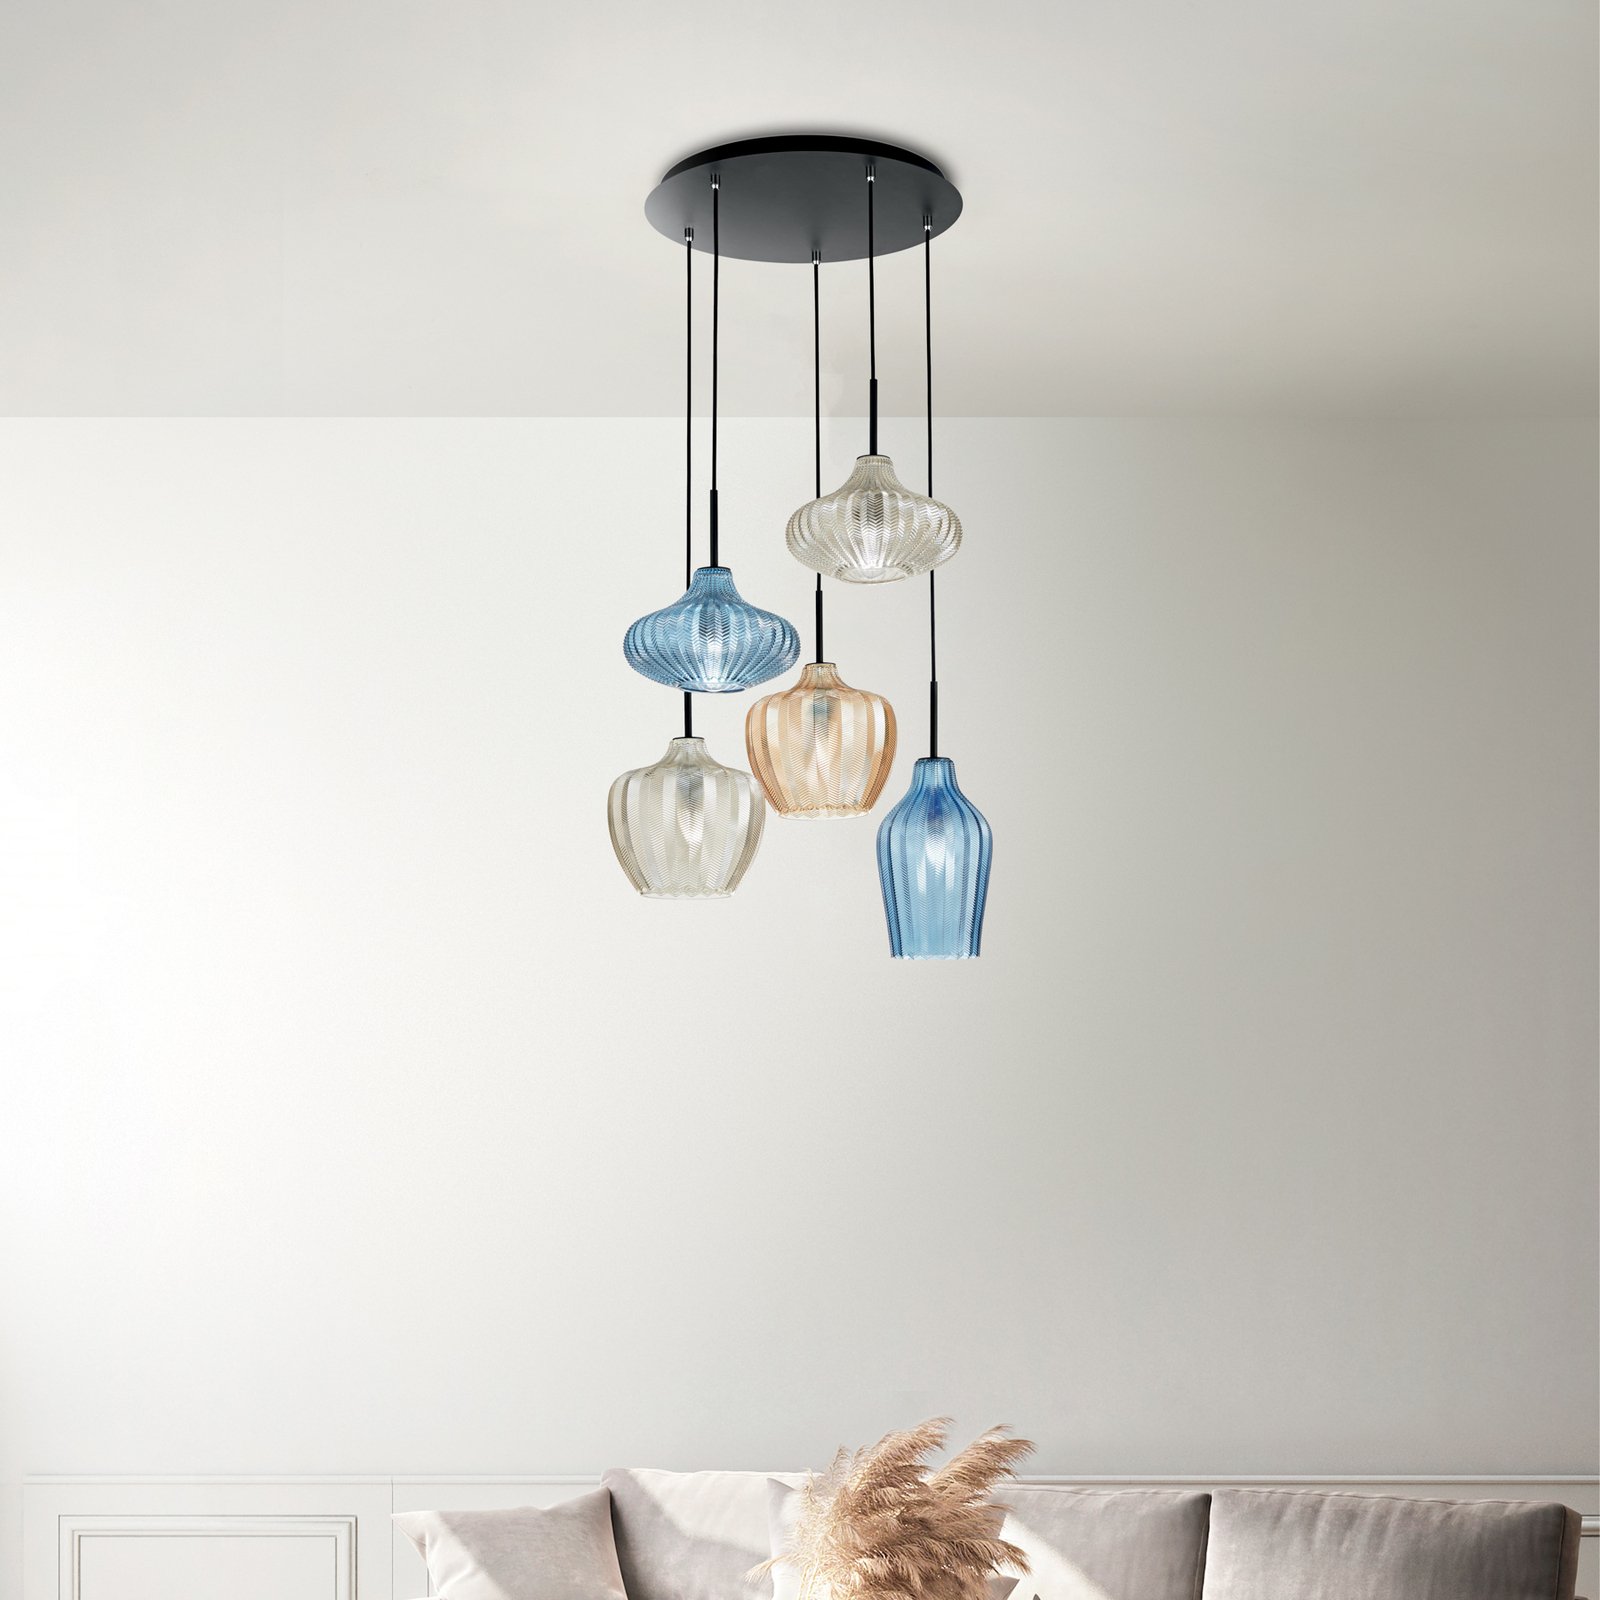 Hanglamp Olbia, Ø 50 cm, 5-lamps, amber/blauw/beige, glas